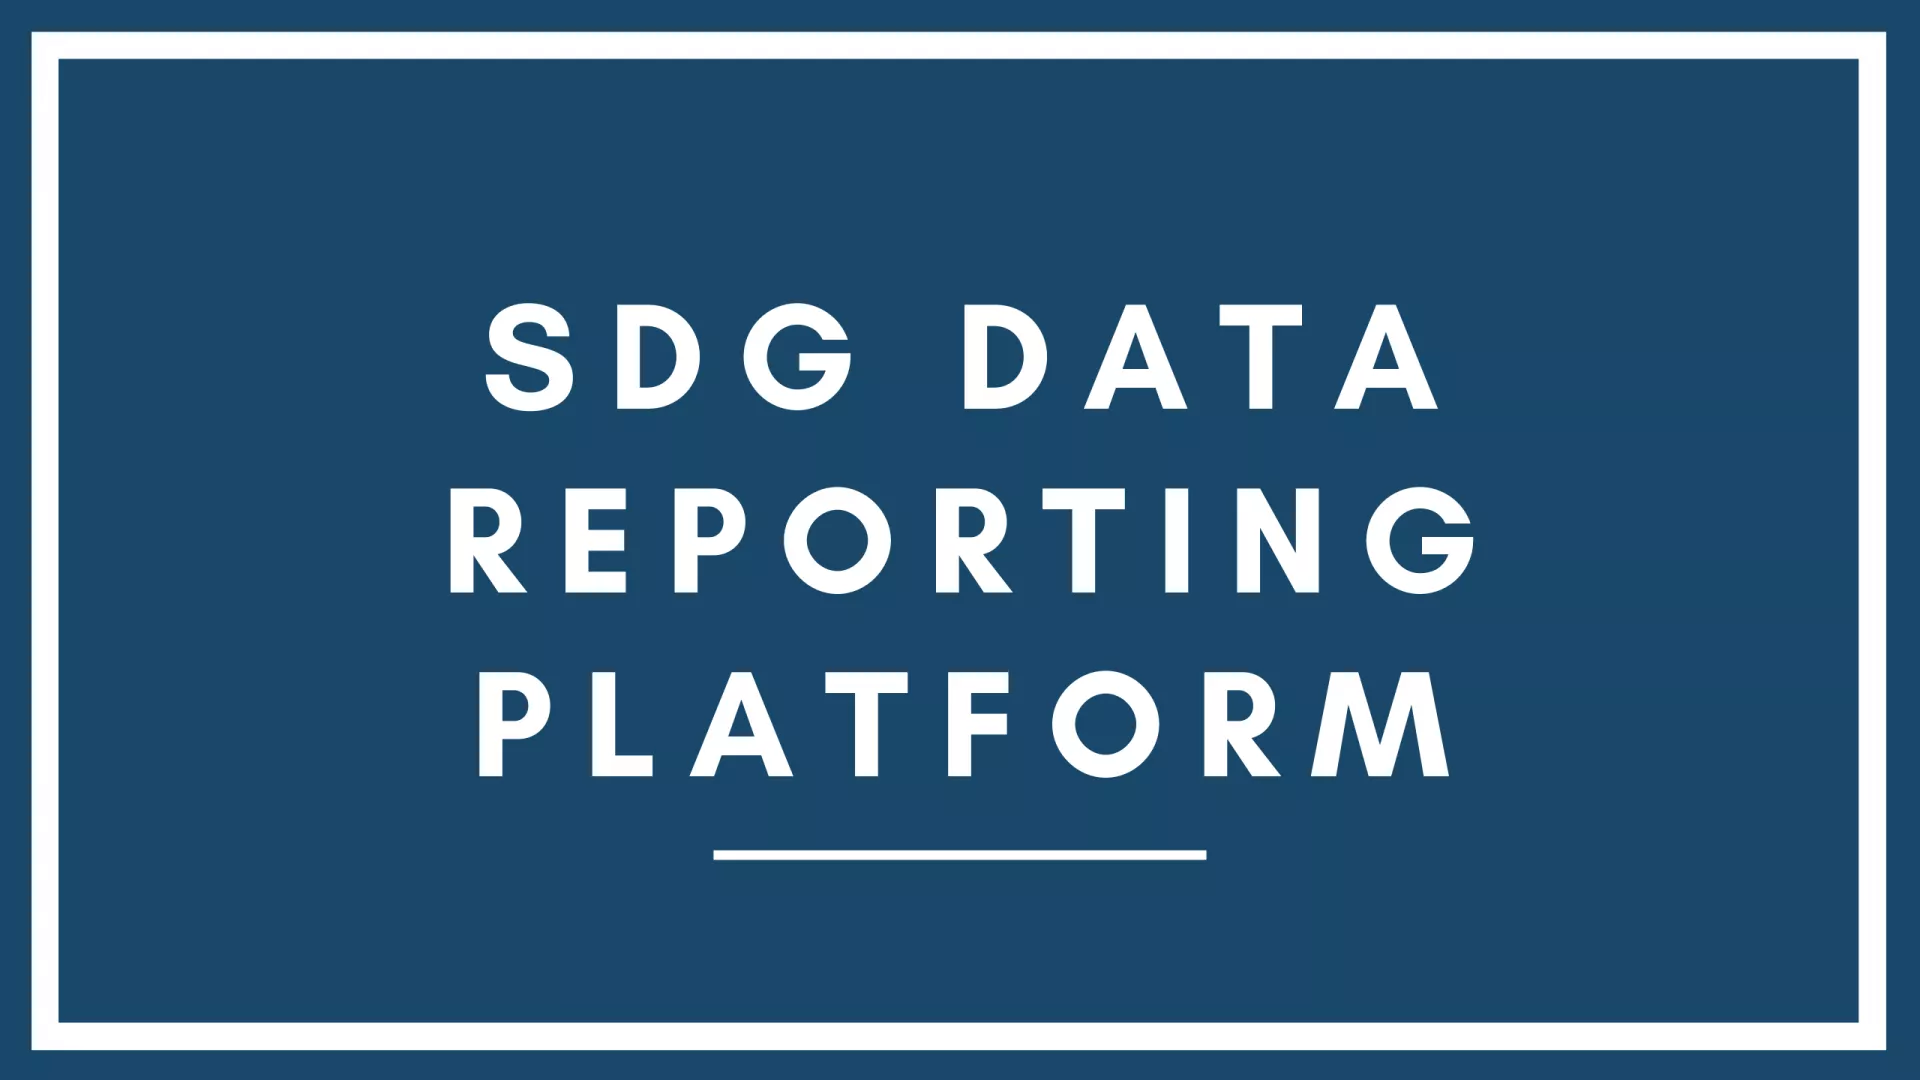 Data reporting platform title image